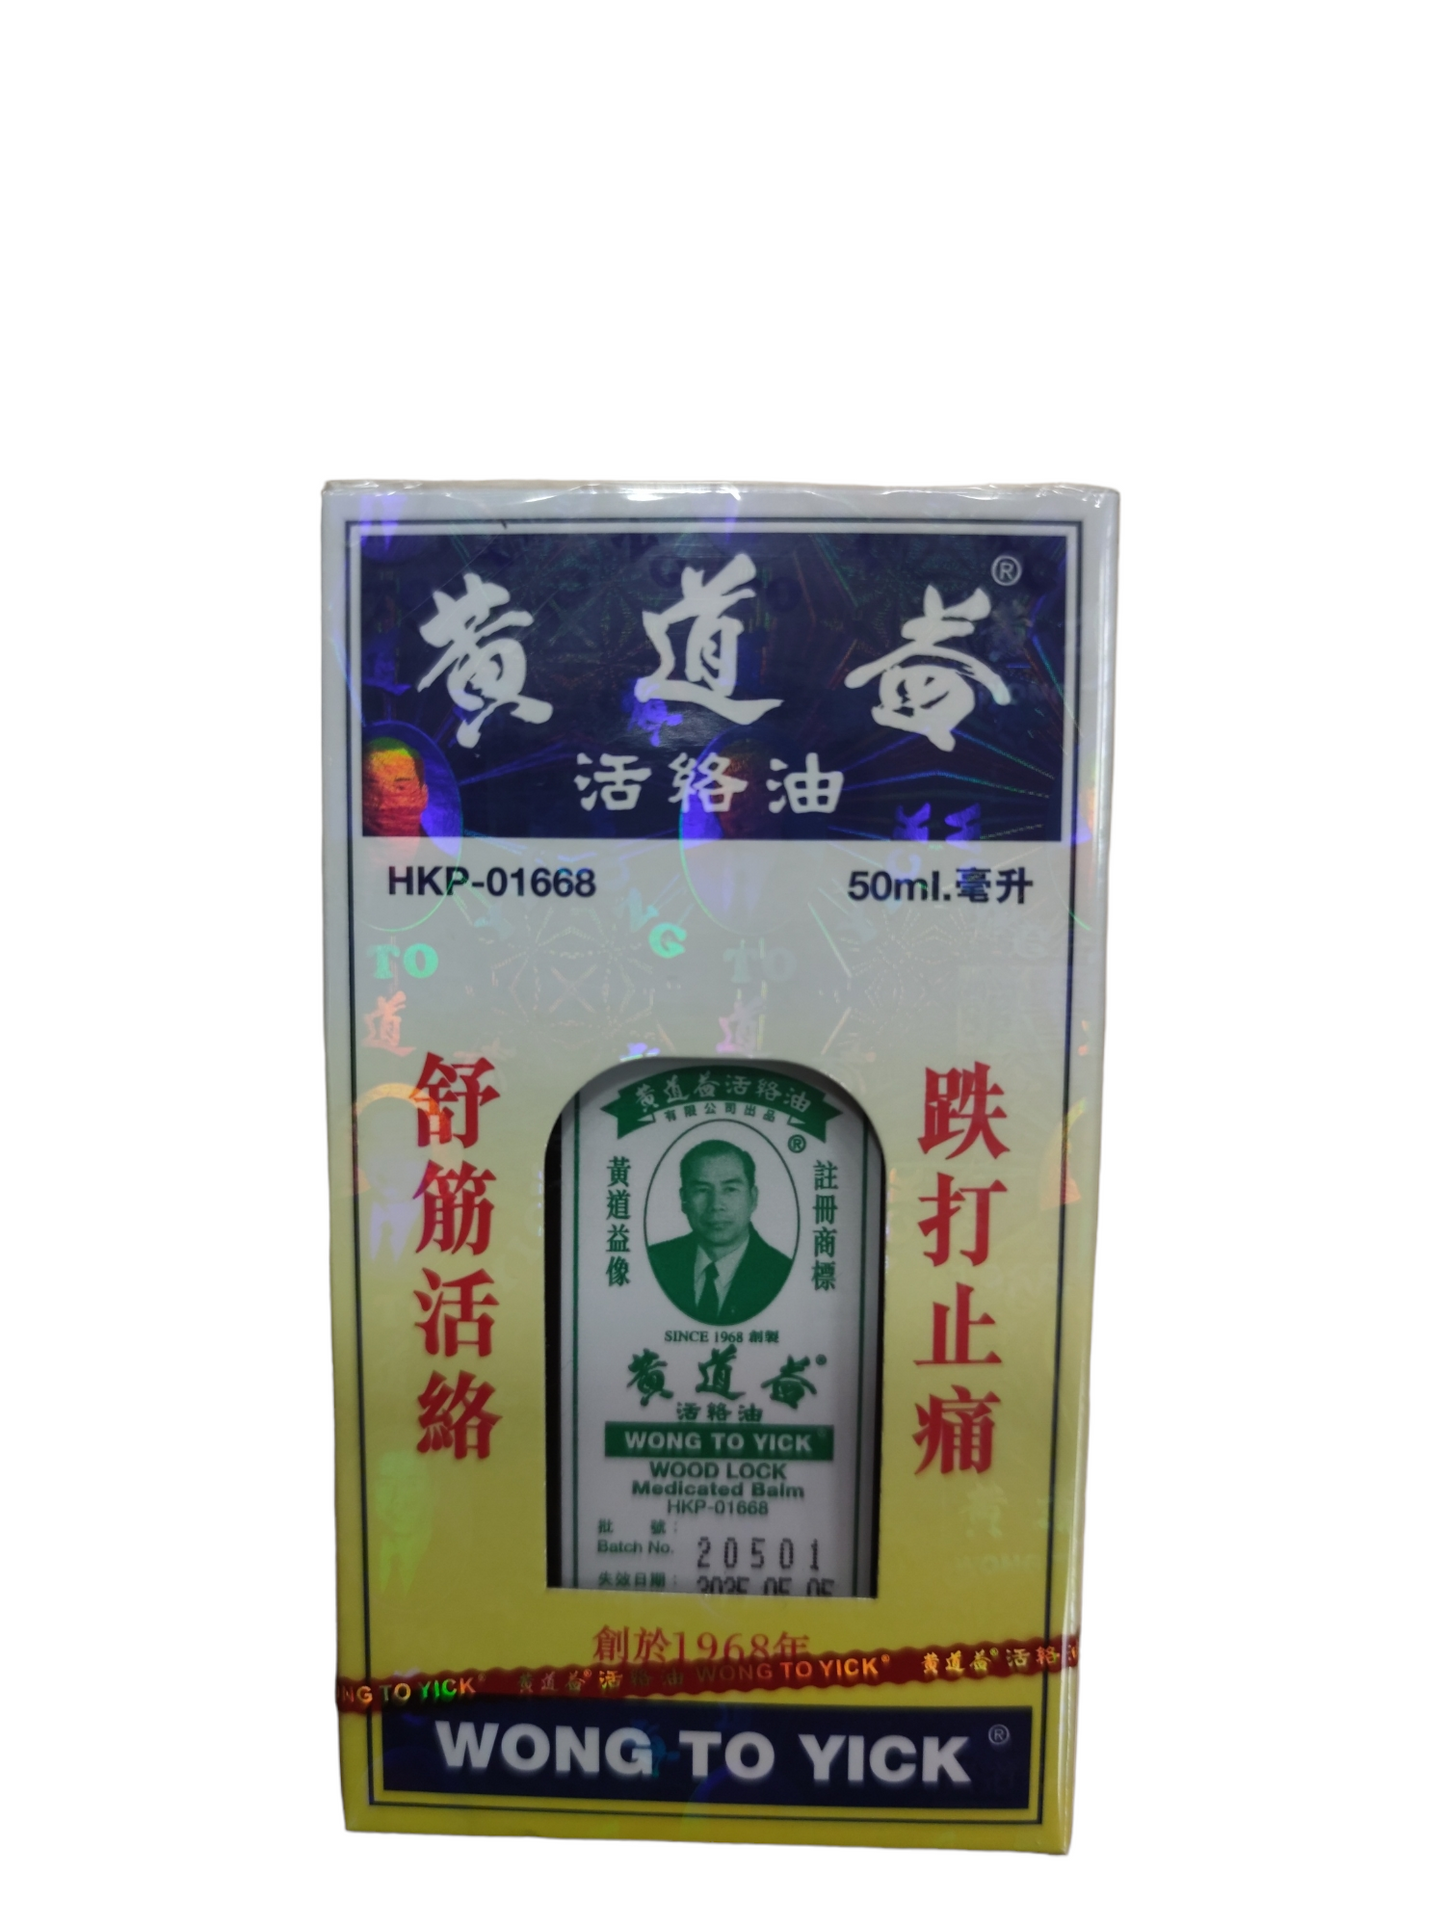 Wong to yock wood lock medicated Balm 黃道益活絡油 50ml